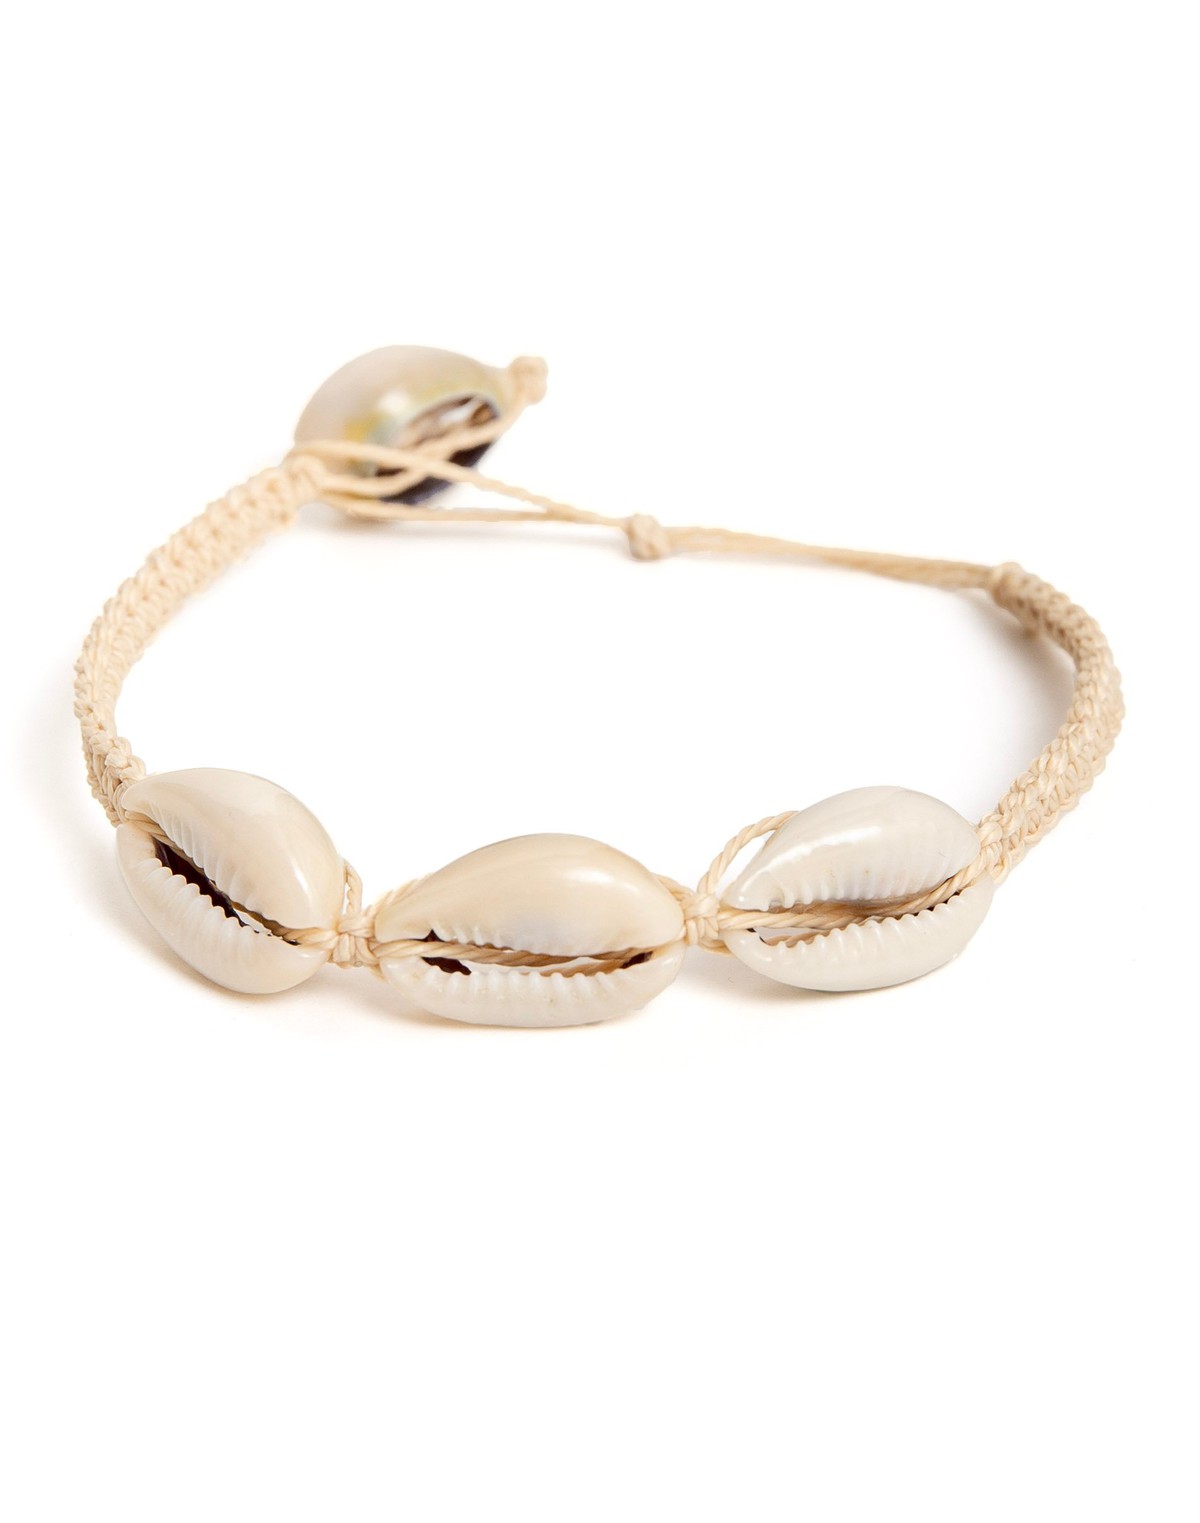 Shell Bracelet - Natural item